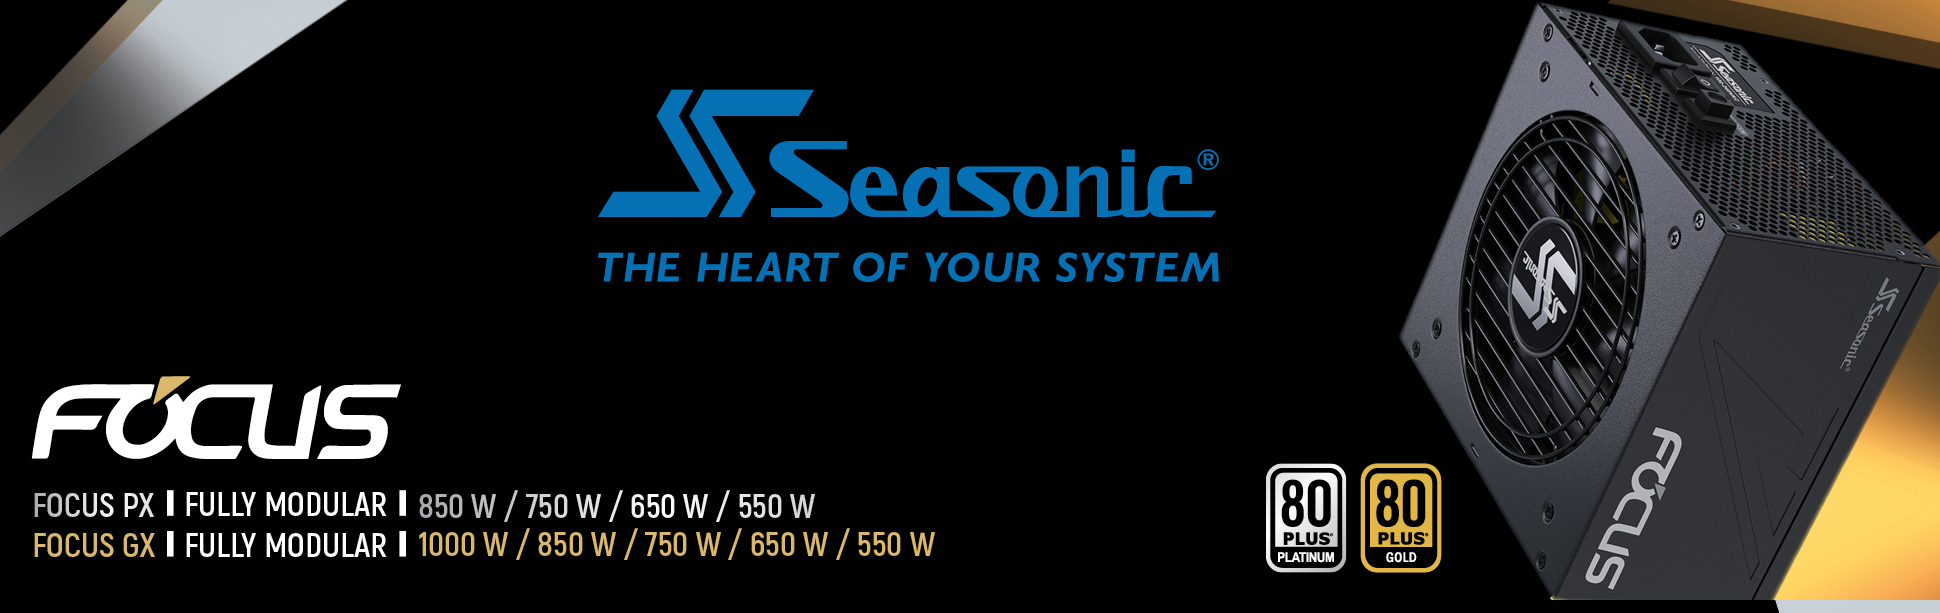 Seasonic Focus side view and Seasonic logo and 80 plus icon